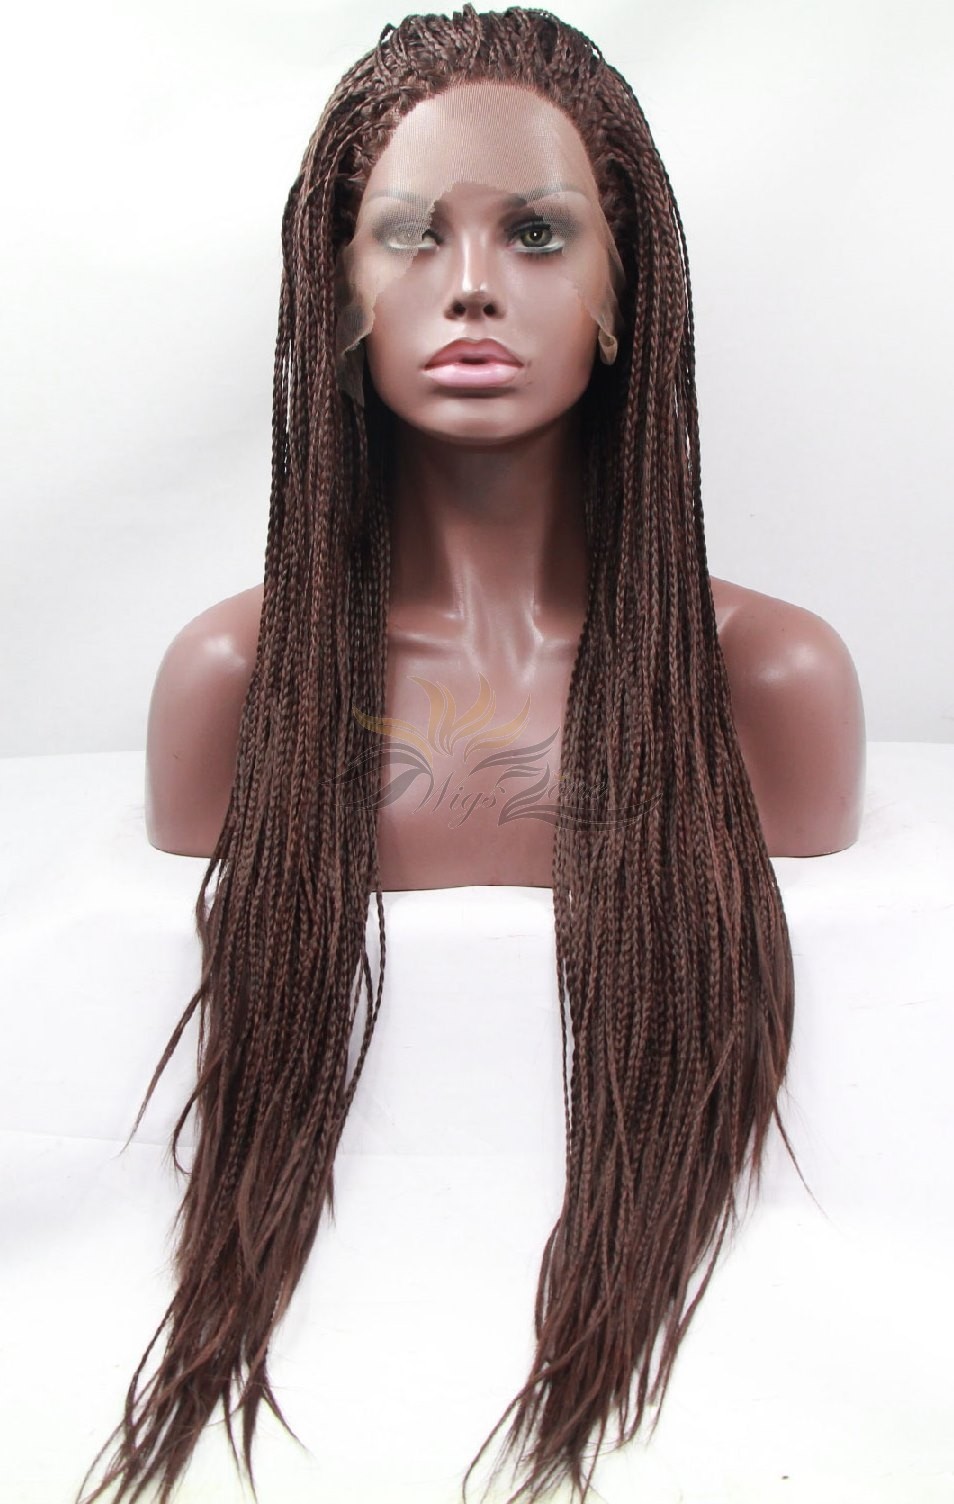 Futura Fiber Brown Braided Box Braid Lace Front Wig Looks & Feels Like Human Hair [SHBB4]